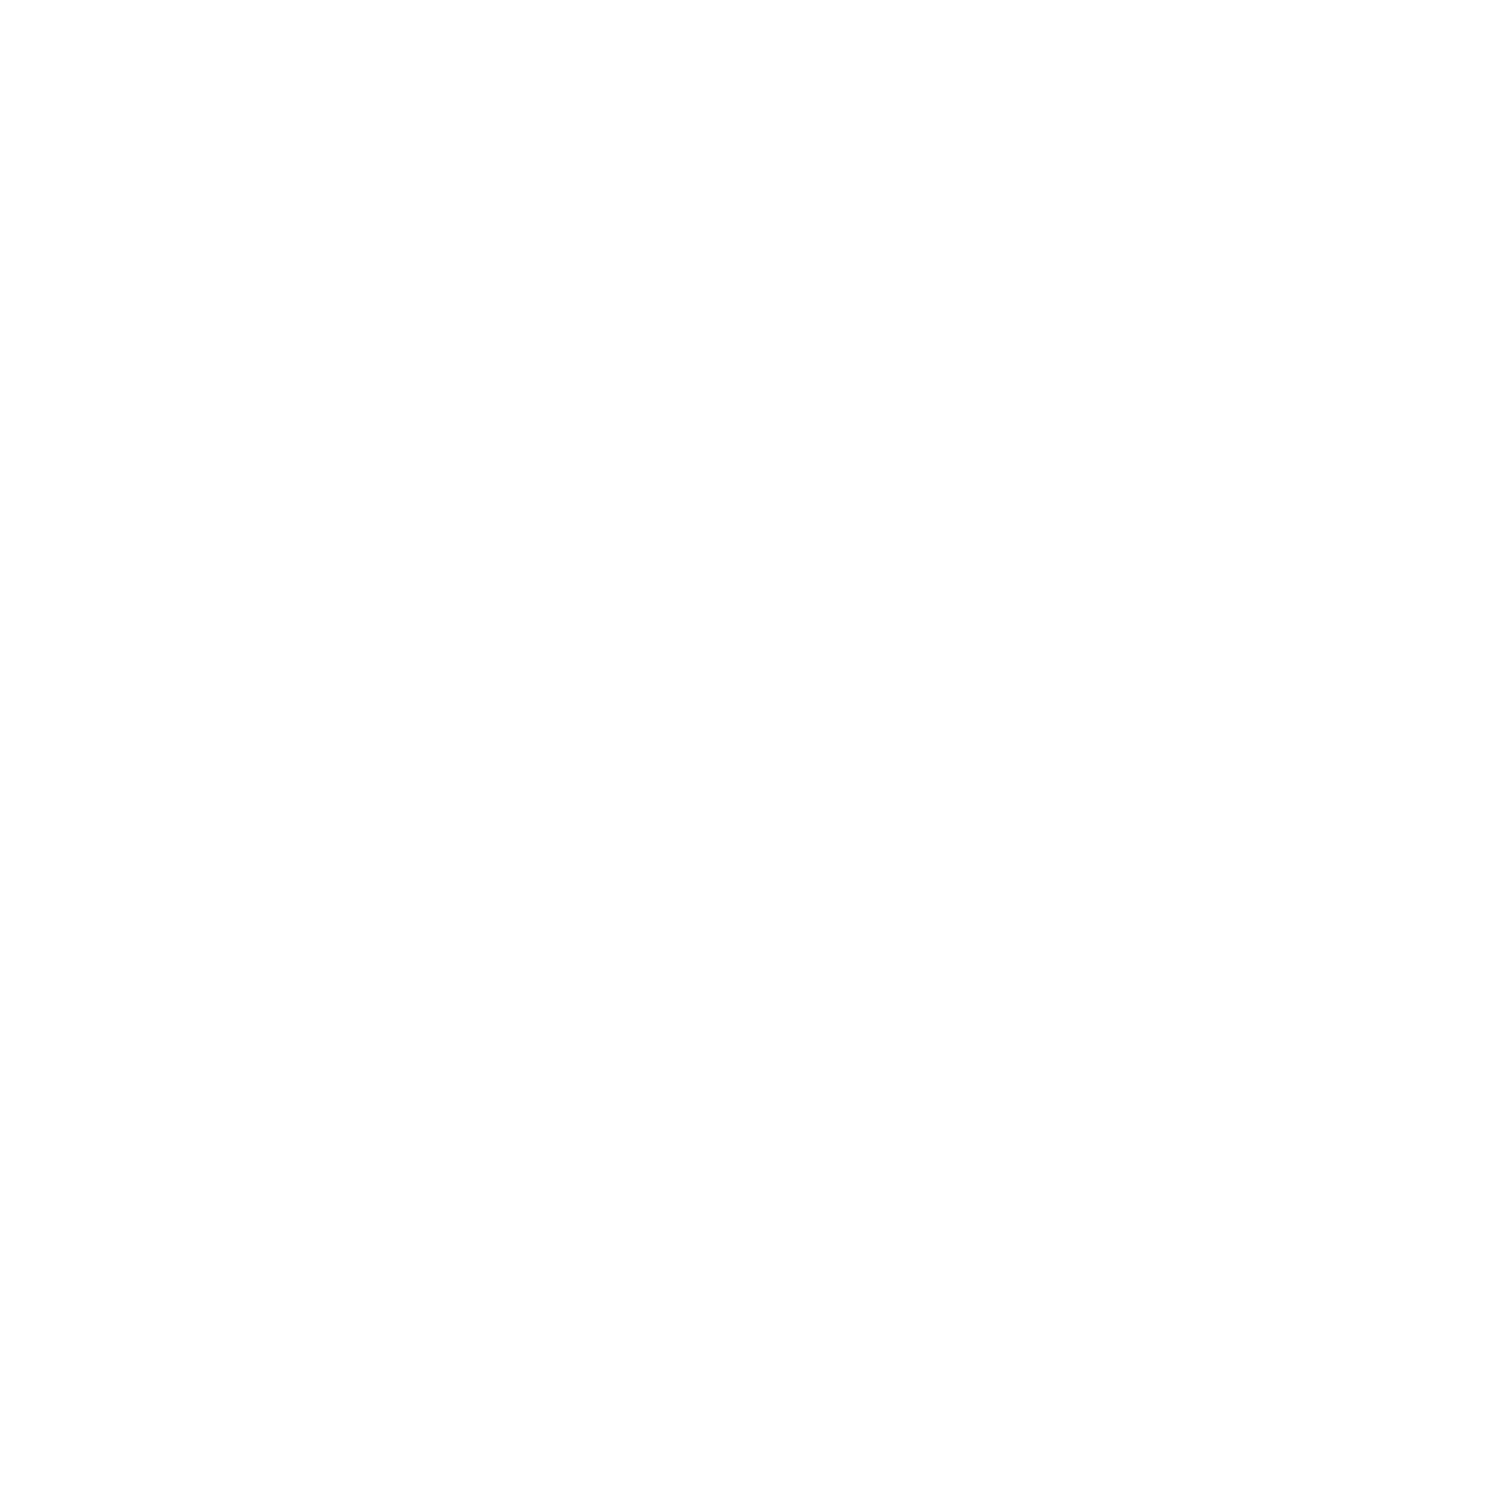 Reborn Coffee logo for dark backgrounds (transparent PNG)